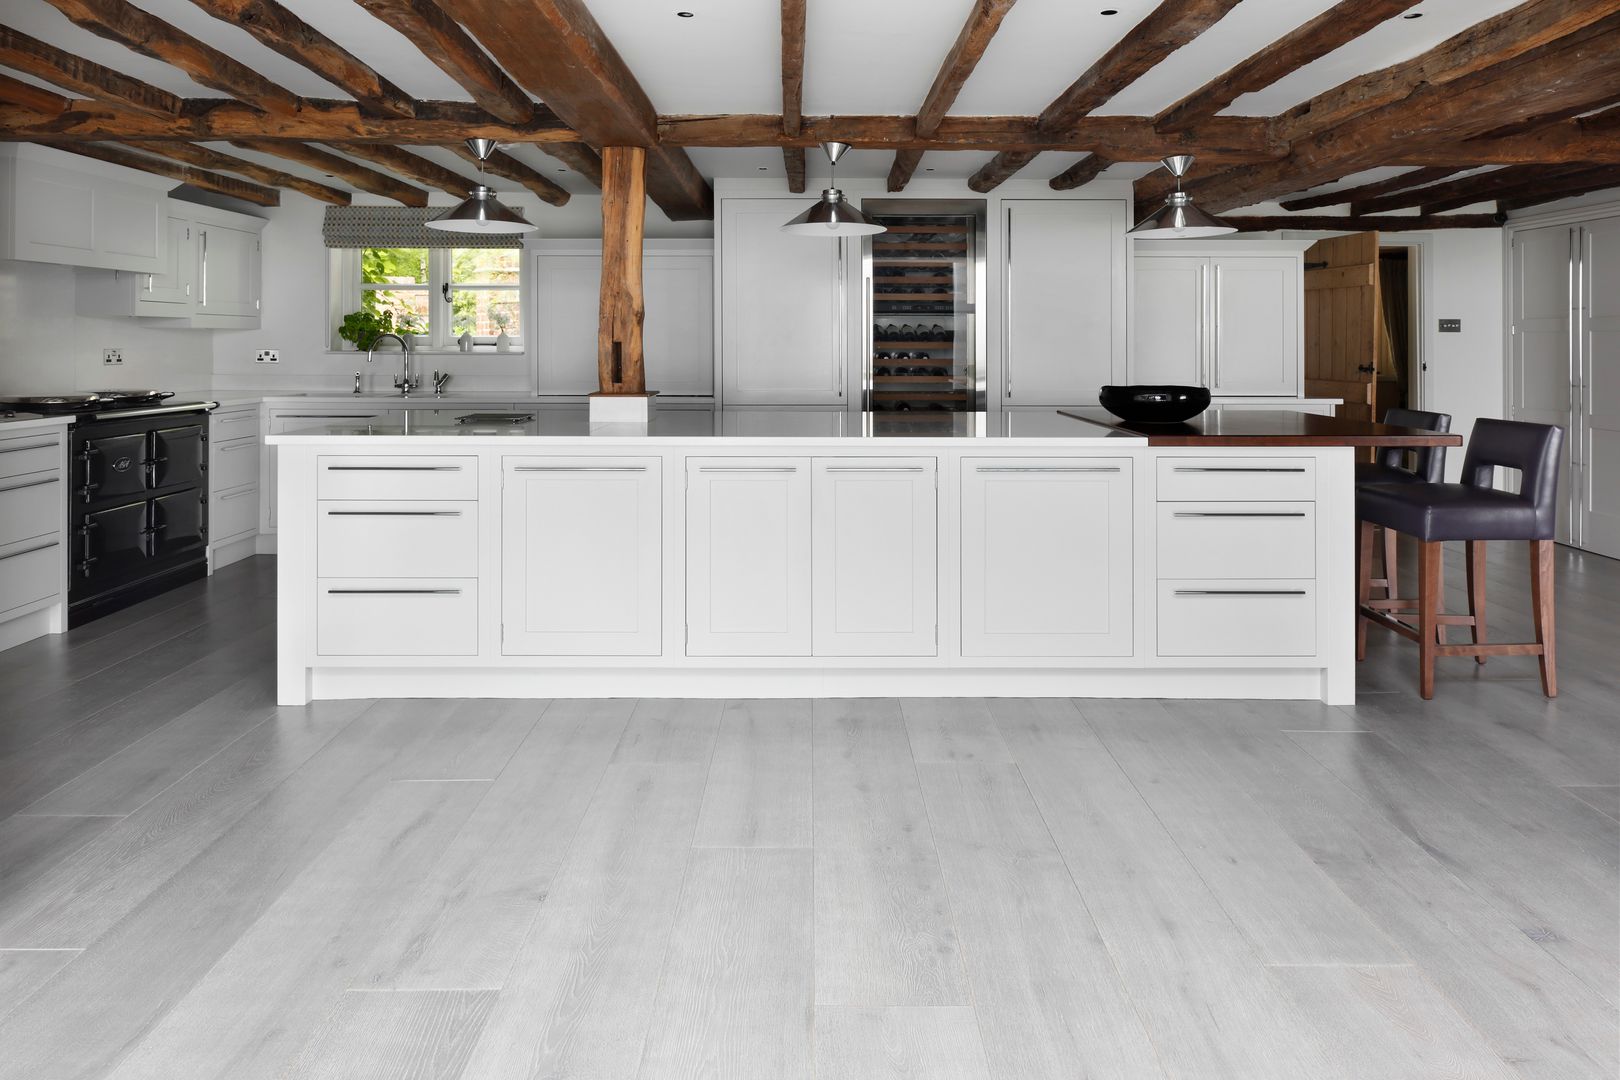 Venetian Grey Oak Flooring in kitchen homify Classic style kitchen